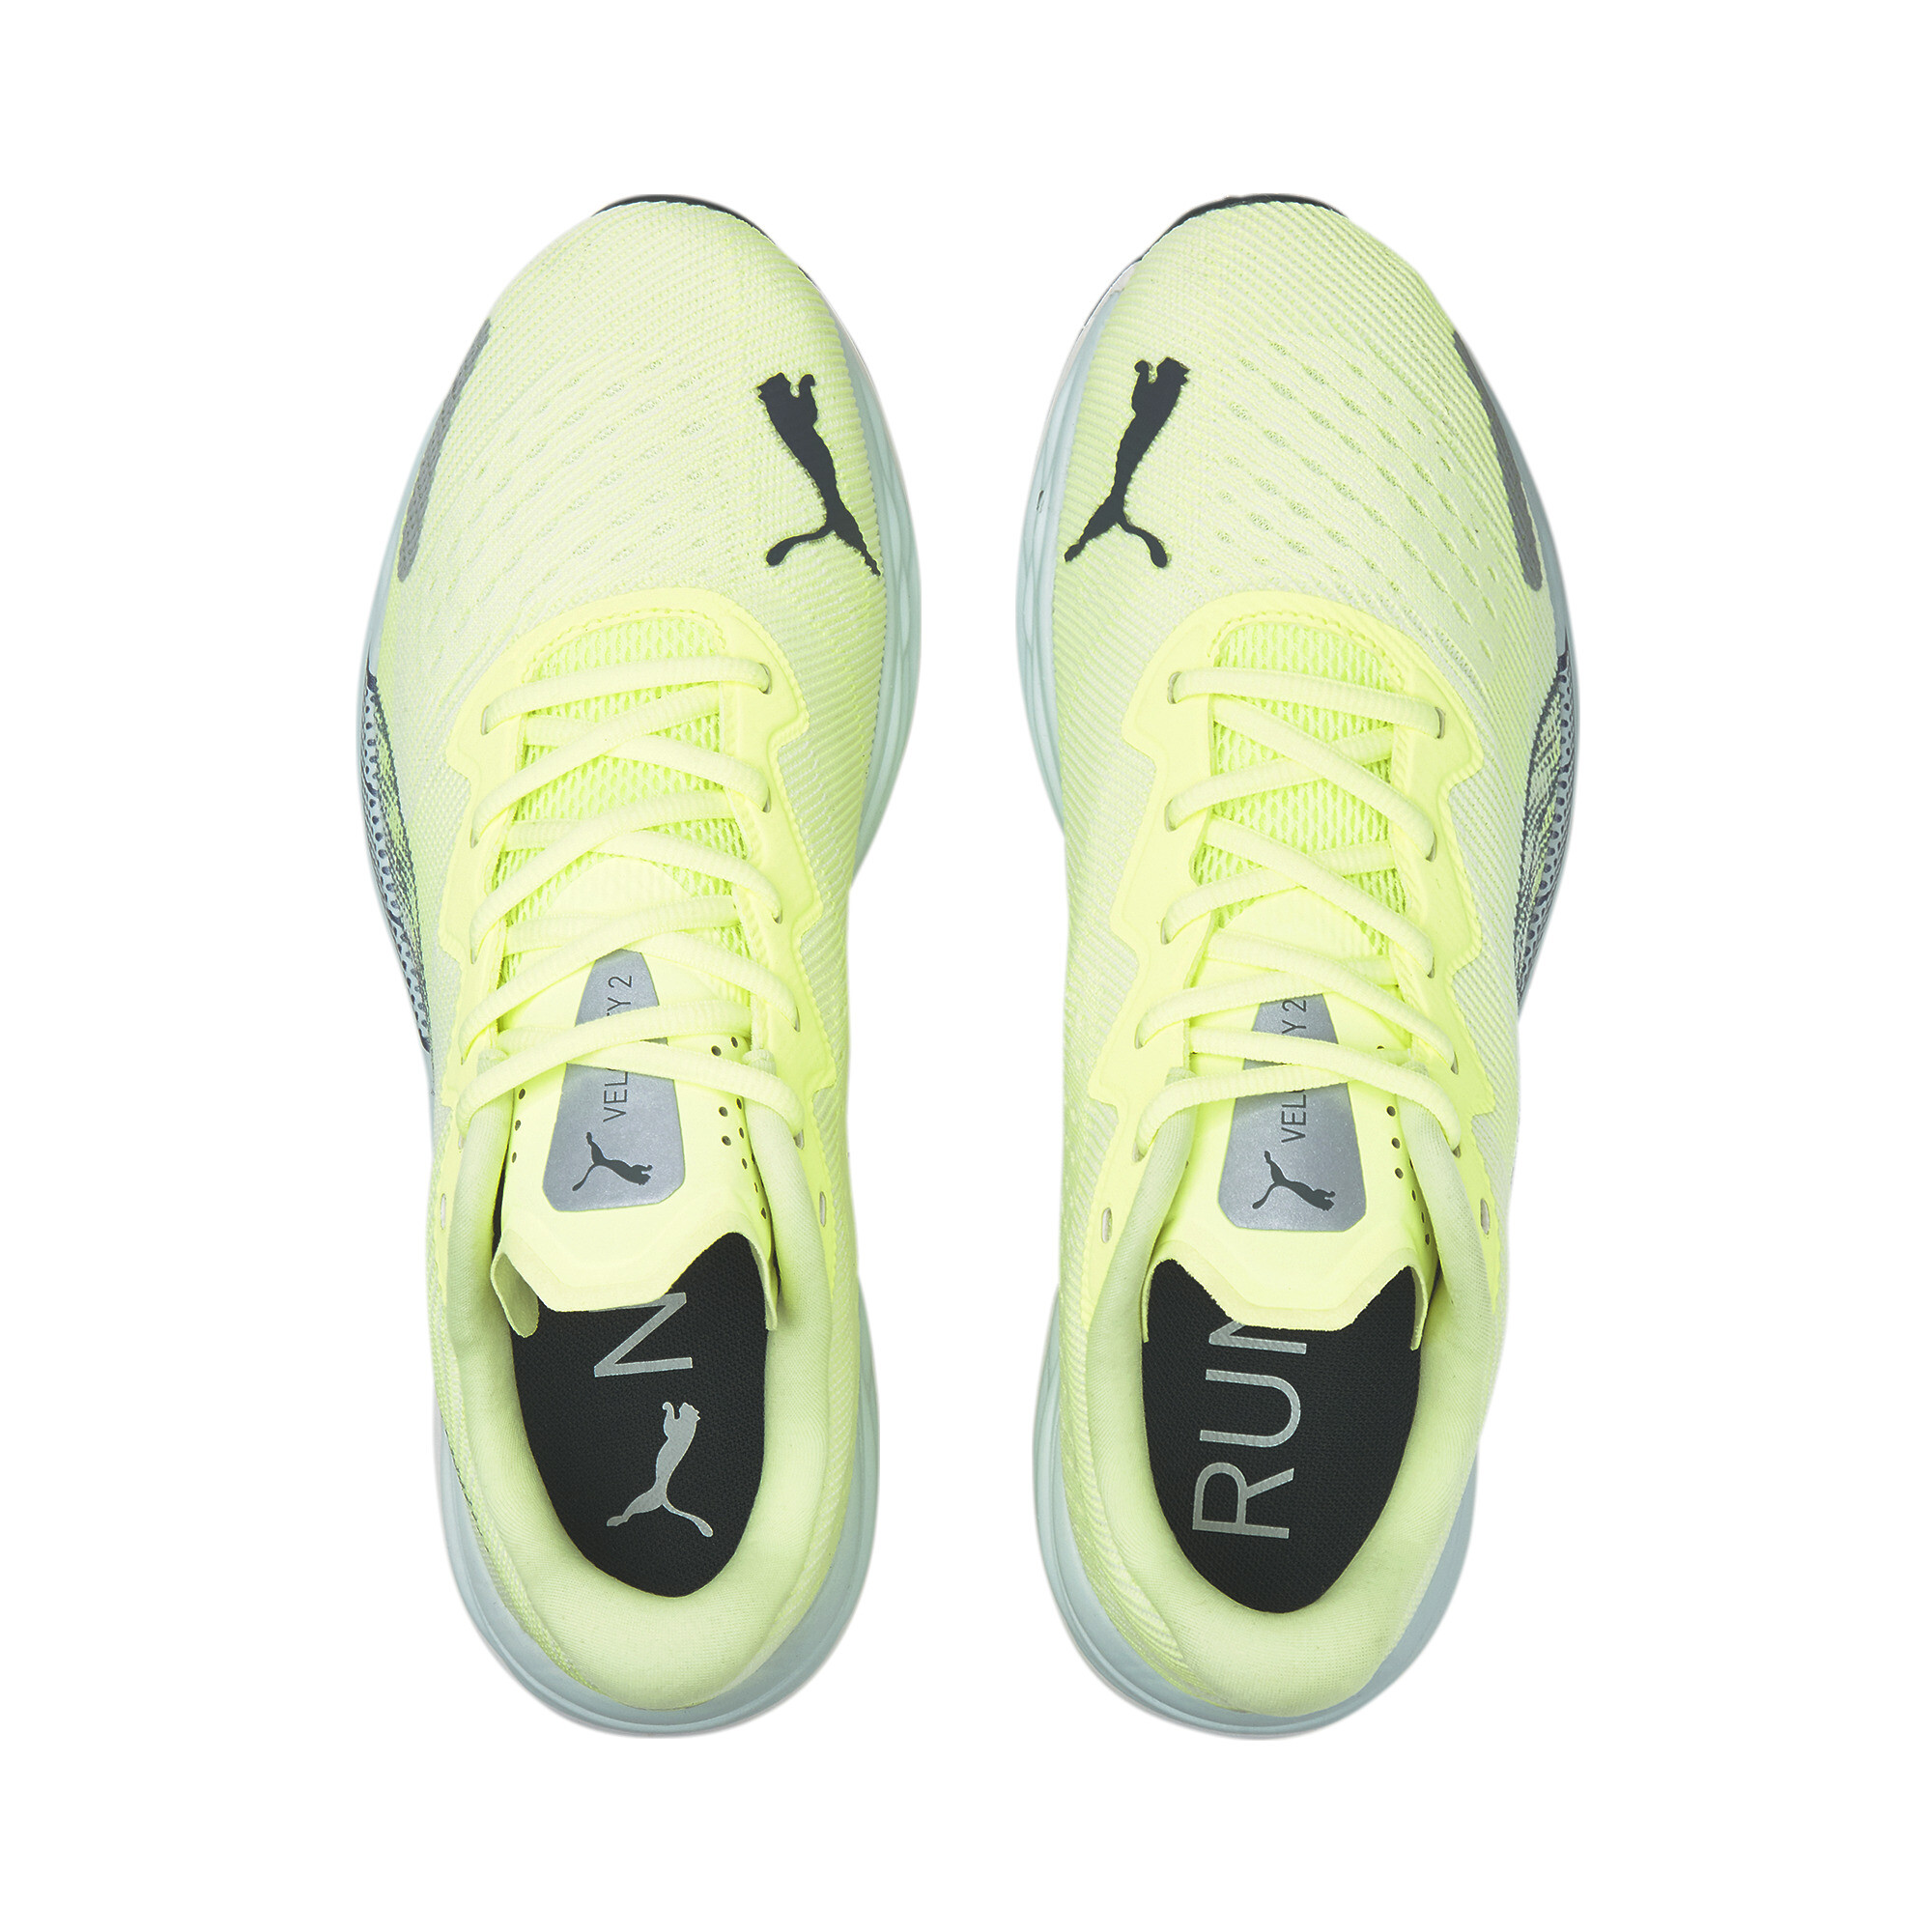 PUMA Velocity Nitro 2 Running Shoes Unisex | eBay